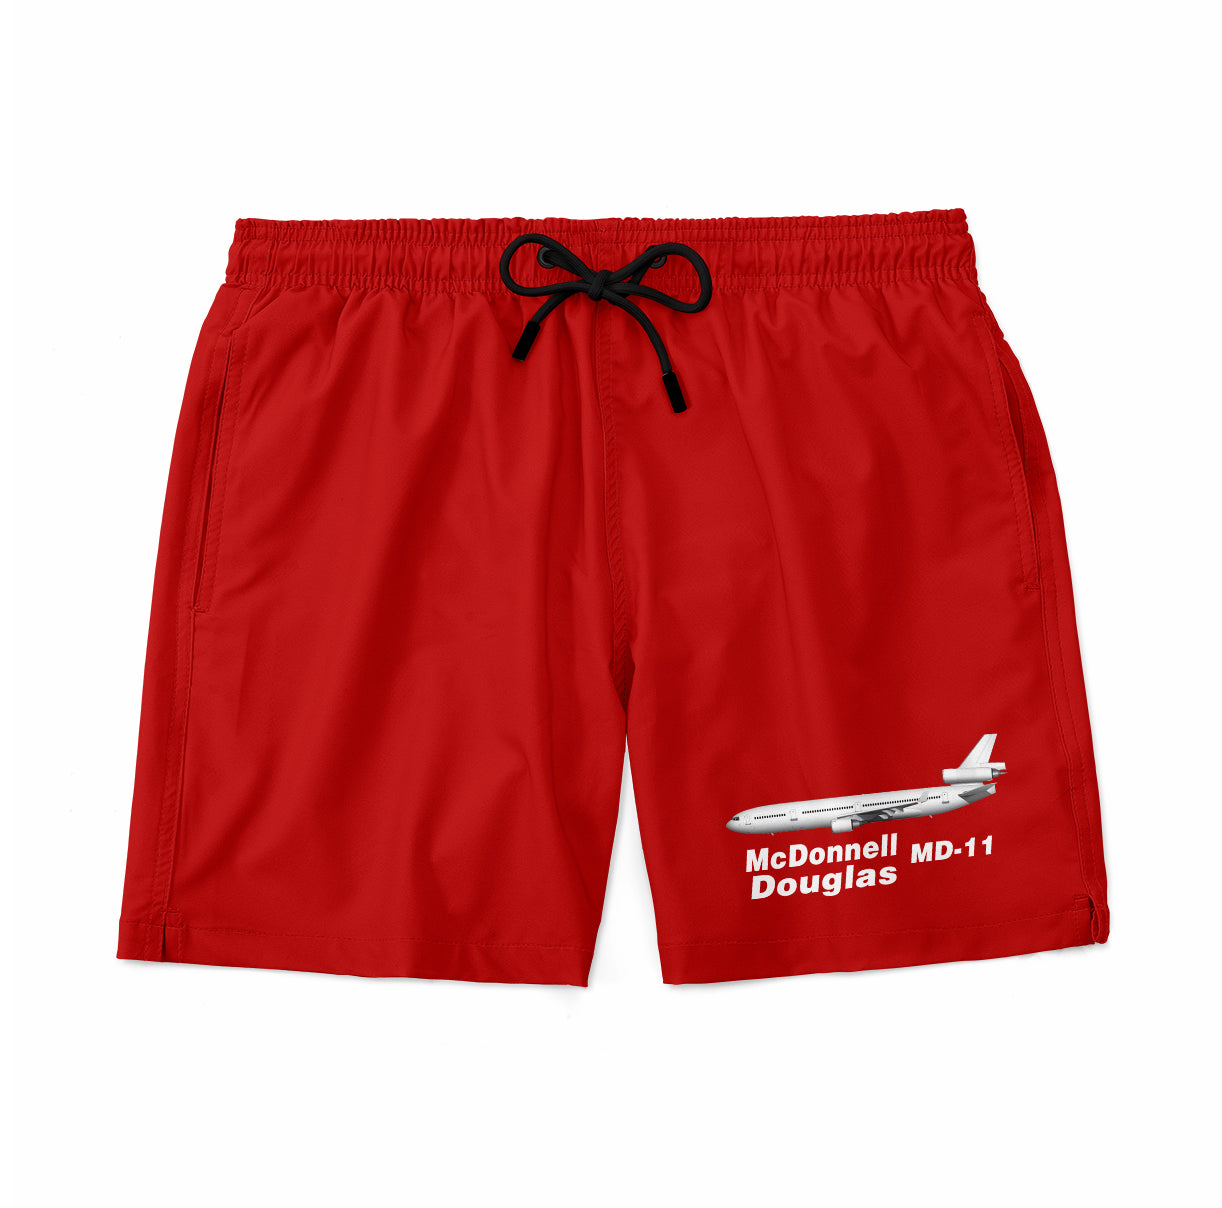 The McDonnell Douglas MD-11 Designed Swim Trunks & Shorts